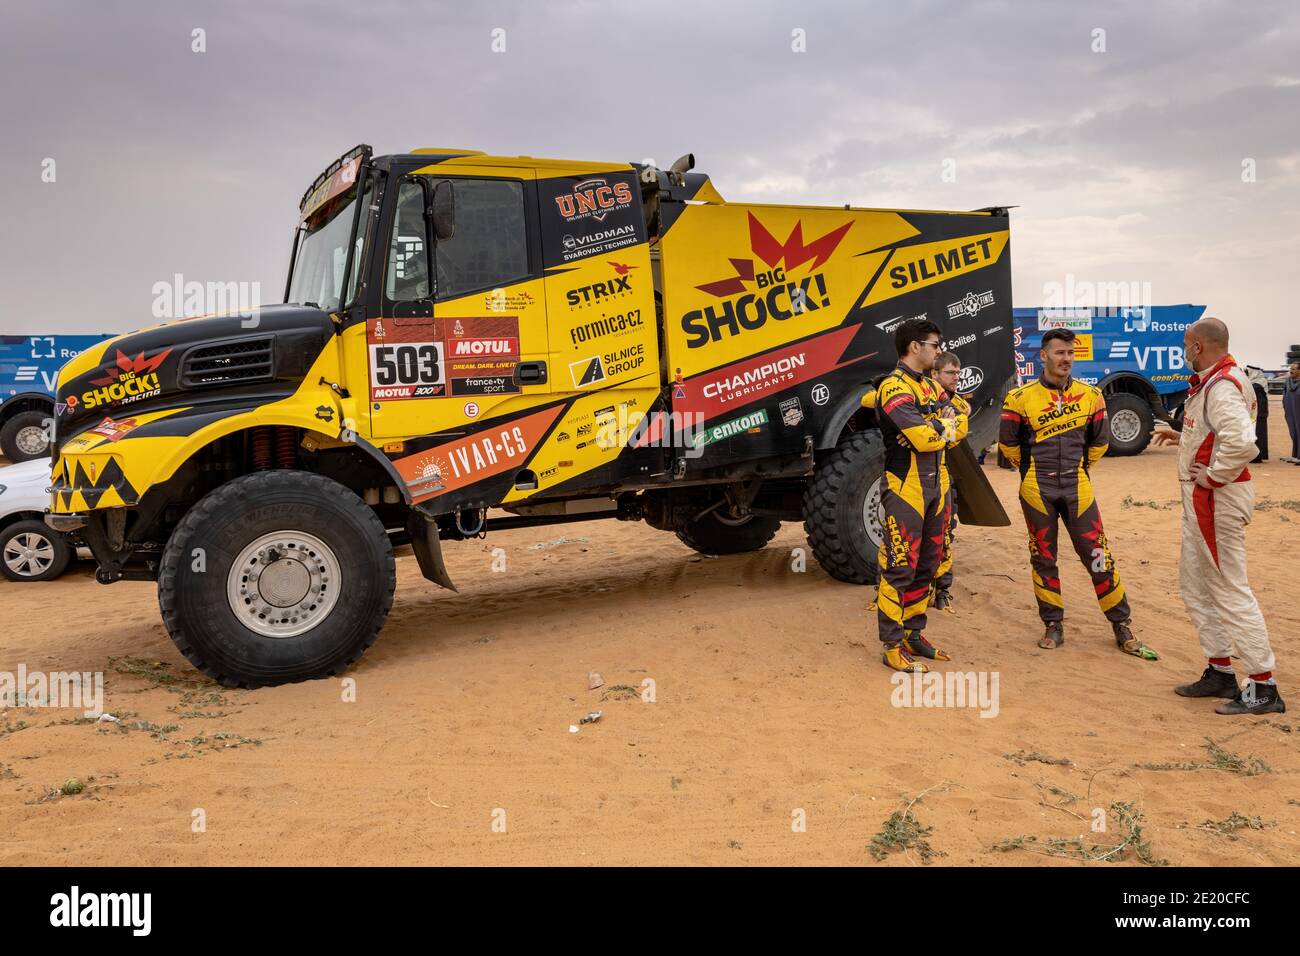 Horimlaa, Saudi Arabia - January 7, 2021: The crew of Team Big Shock Racing near their truck Iveco before the start of Stage 5 of Dakar Rally Stock Photo